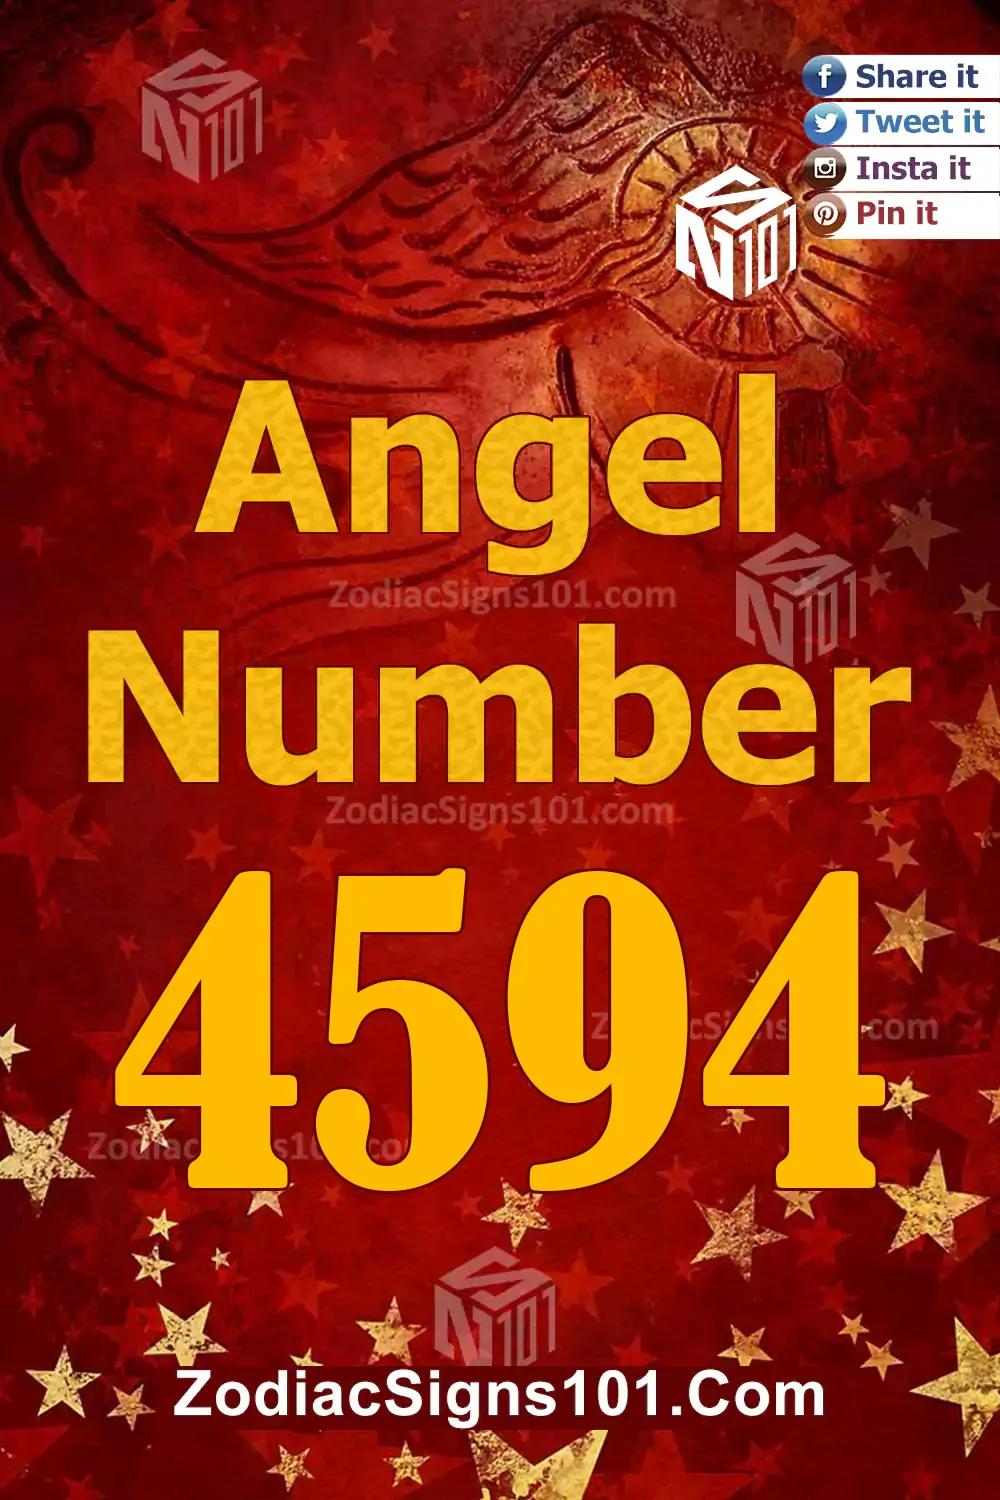 4594-Angel-Number-Meaning.jpg